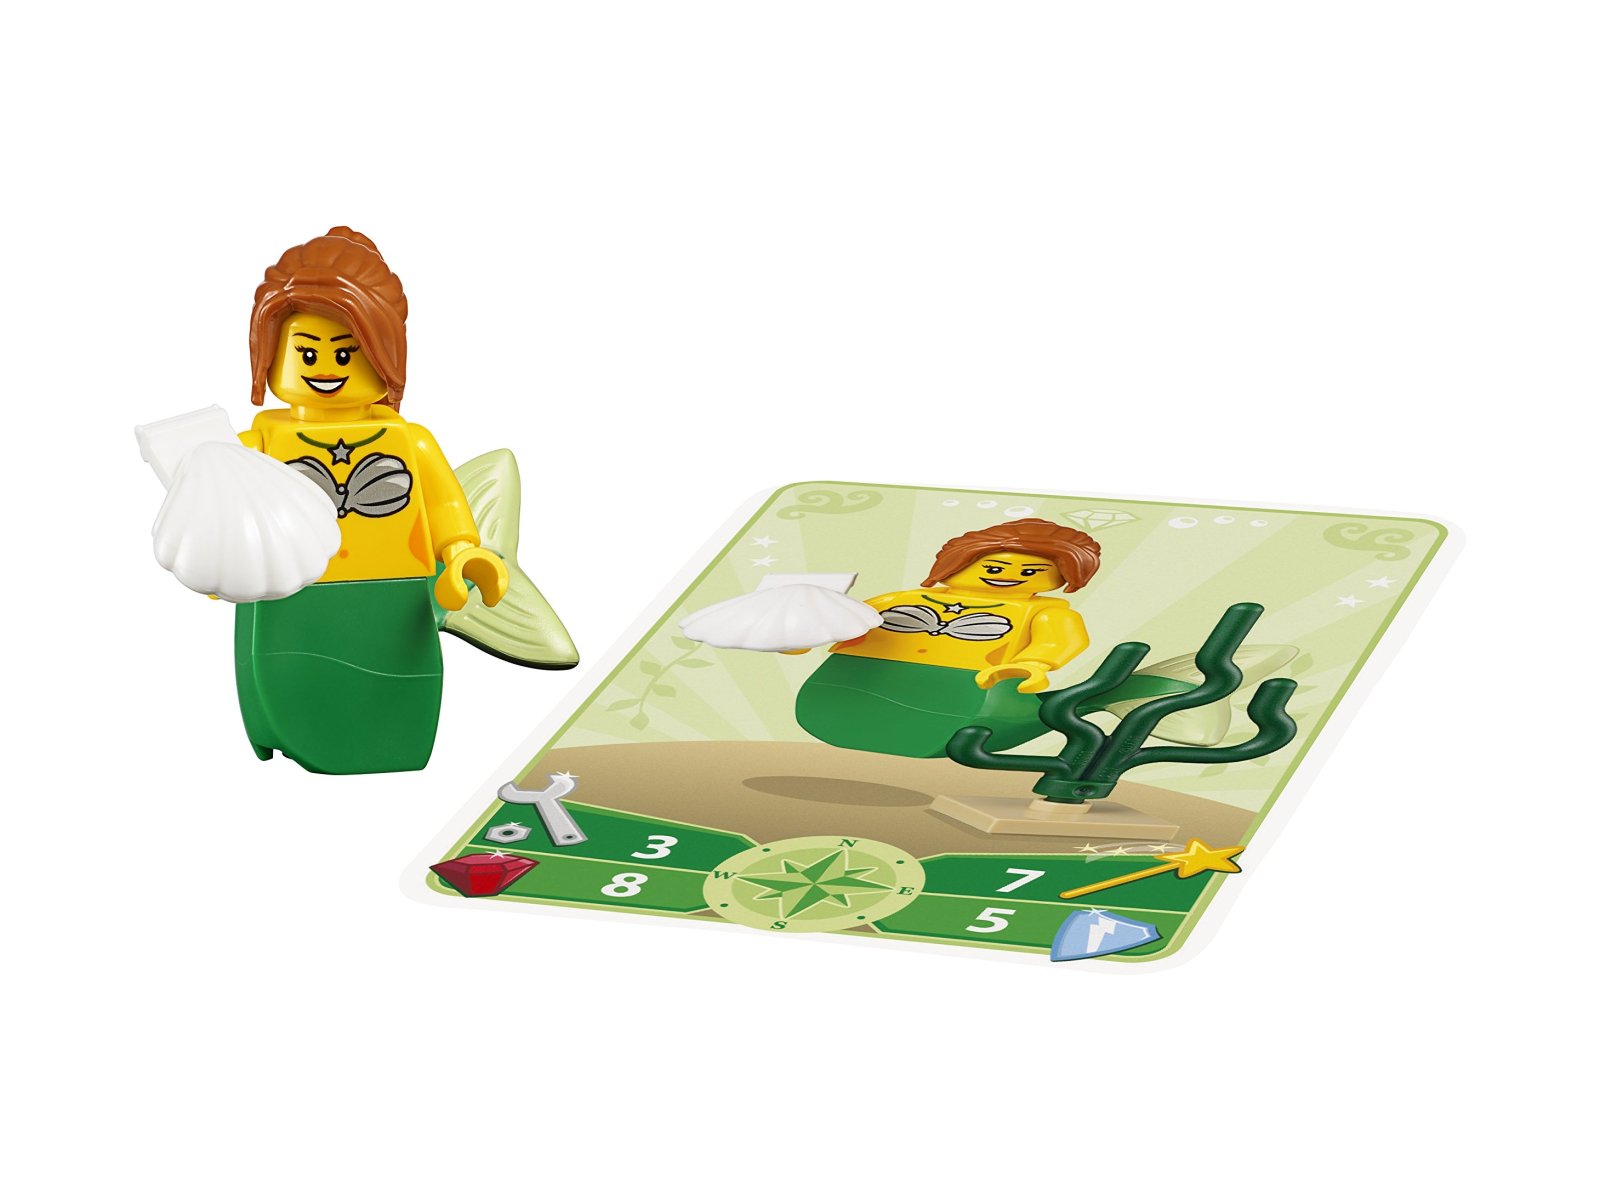 LEGO 45023 Fantasy Minifigure Set